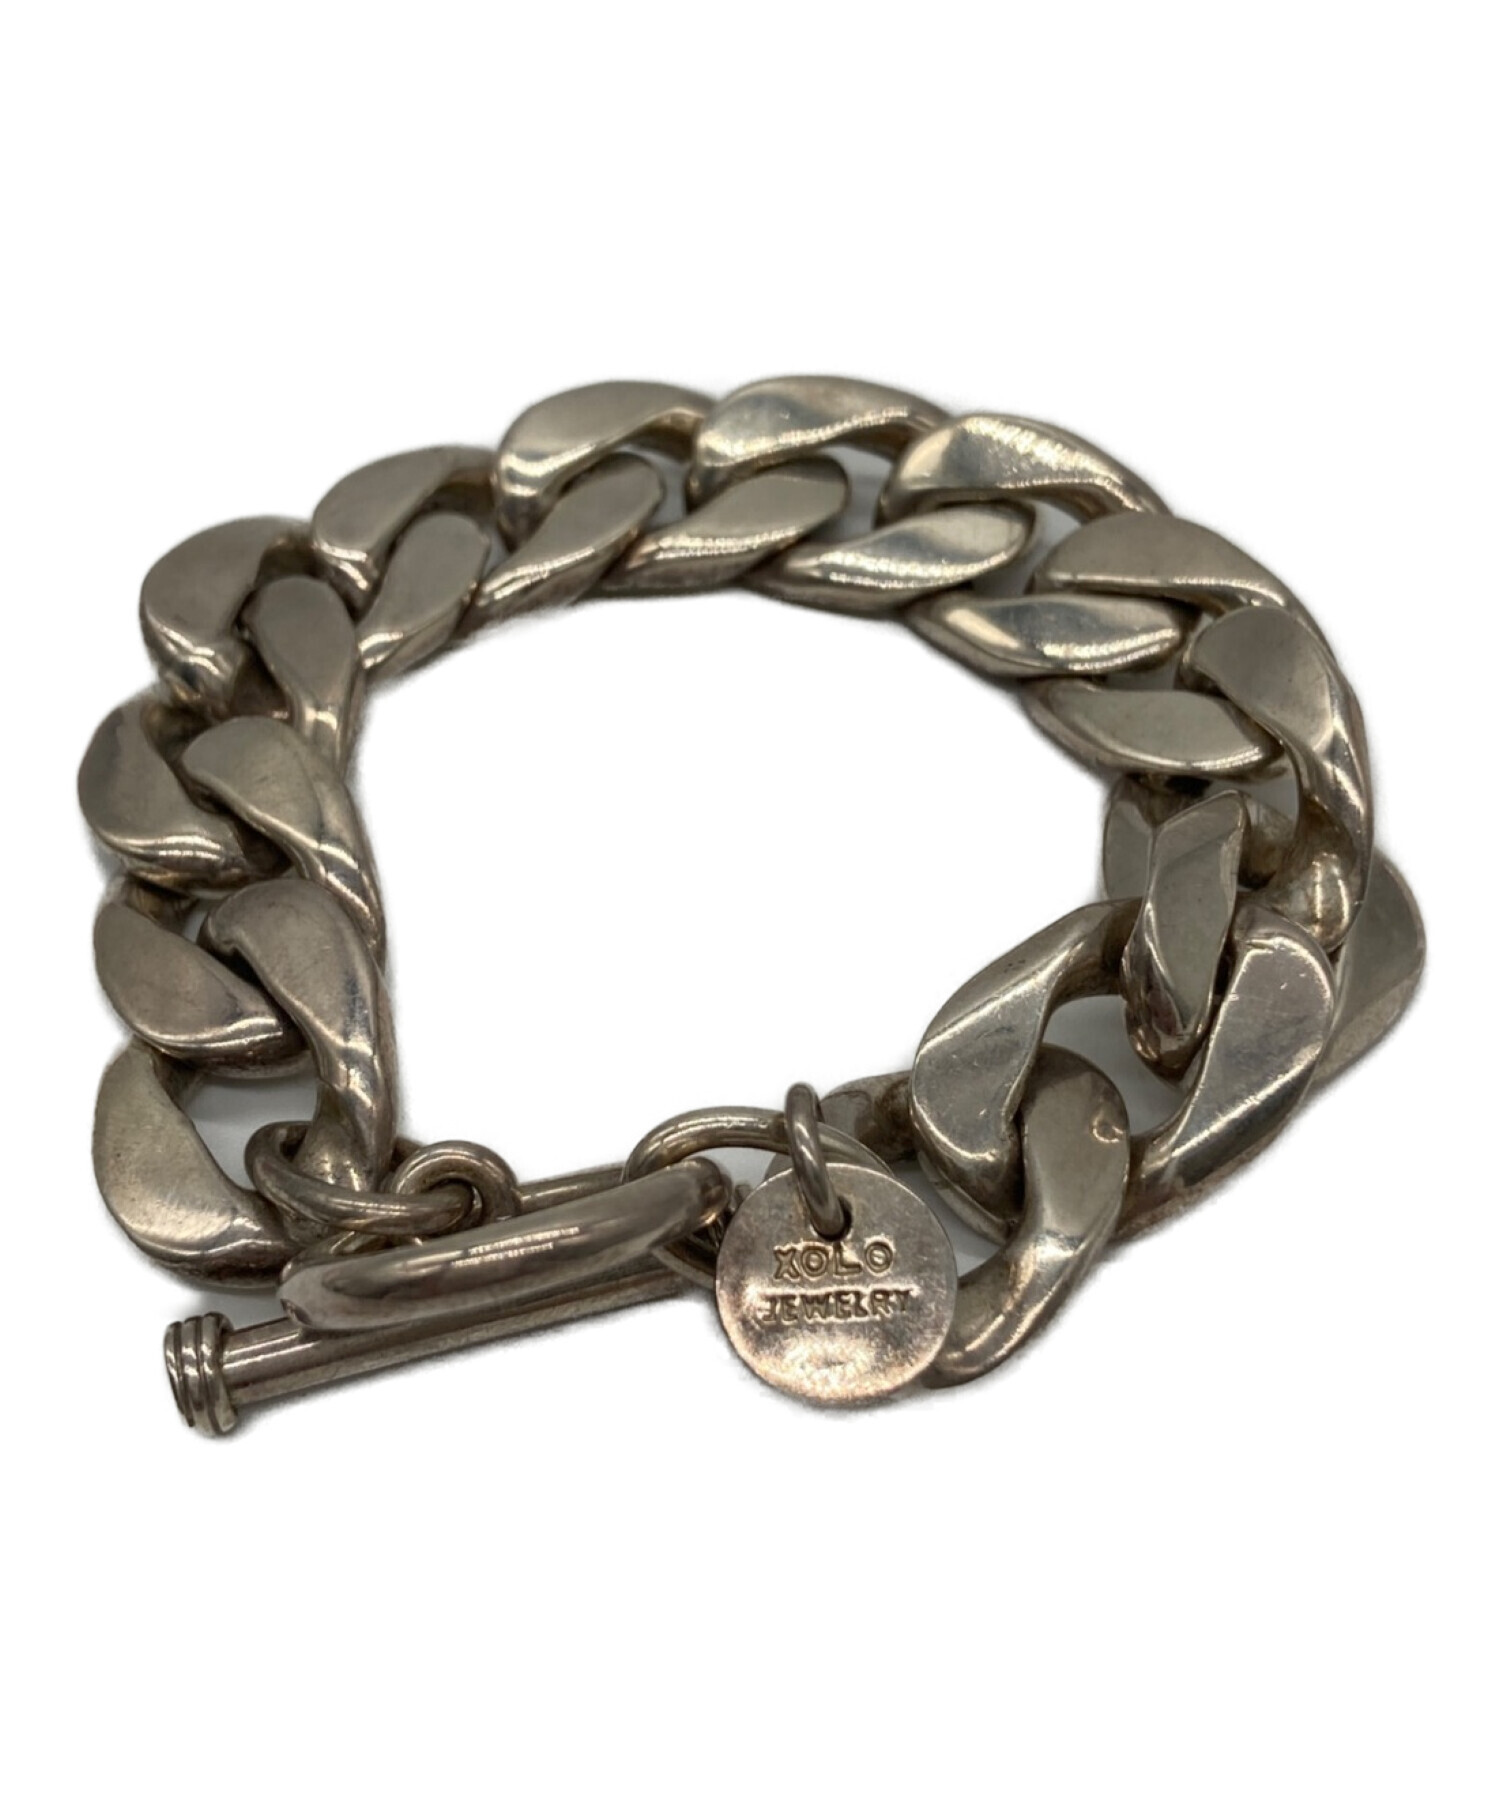 xolo jewelry (ショロ ジュエリー) basic link bracelet